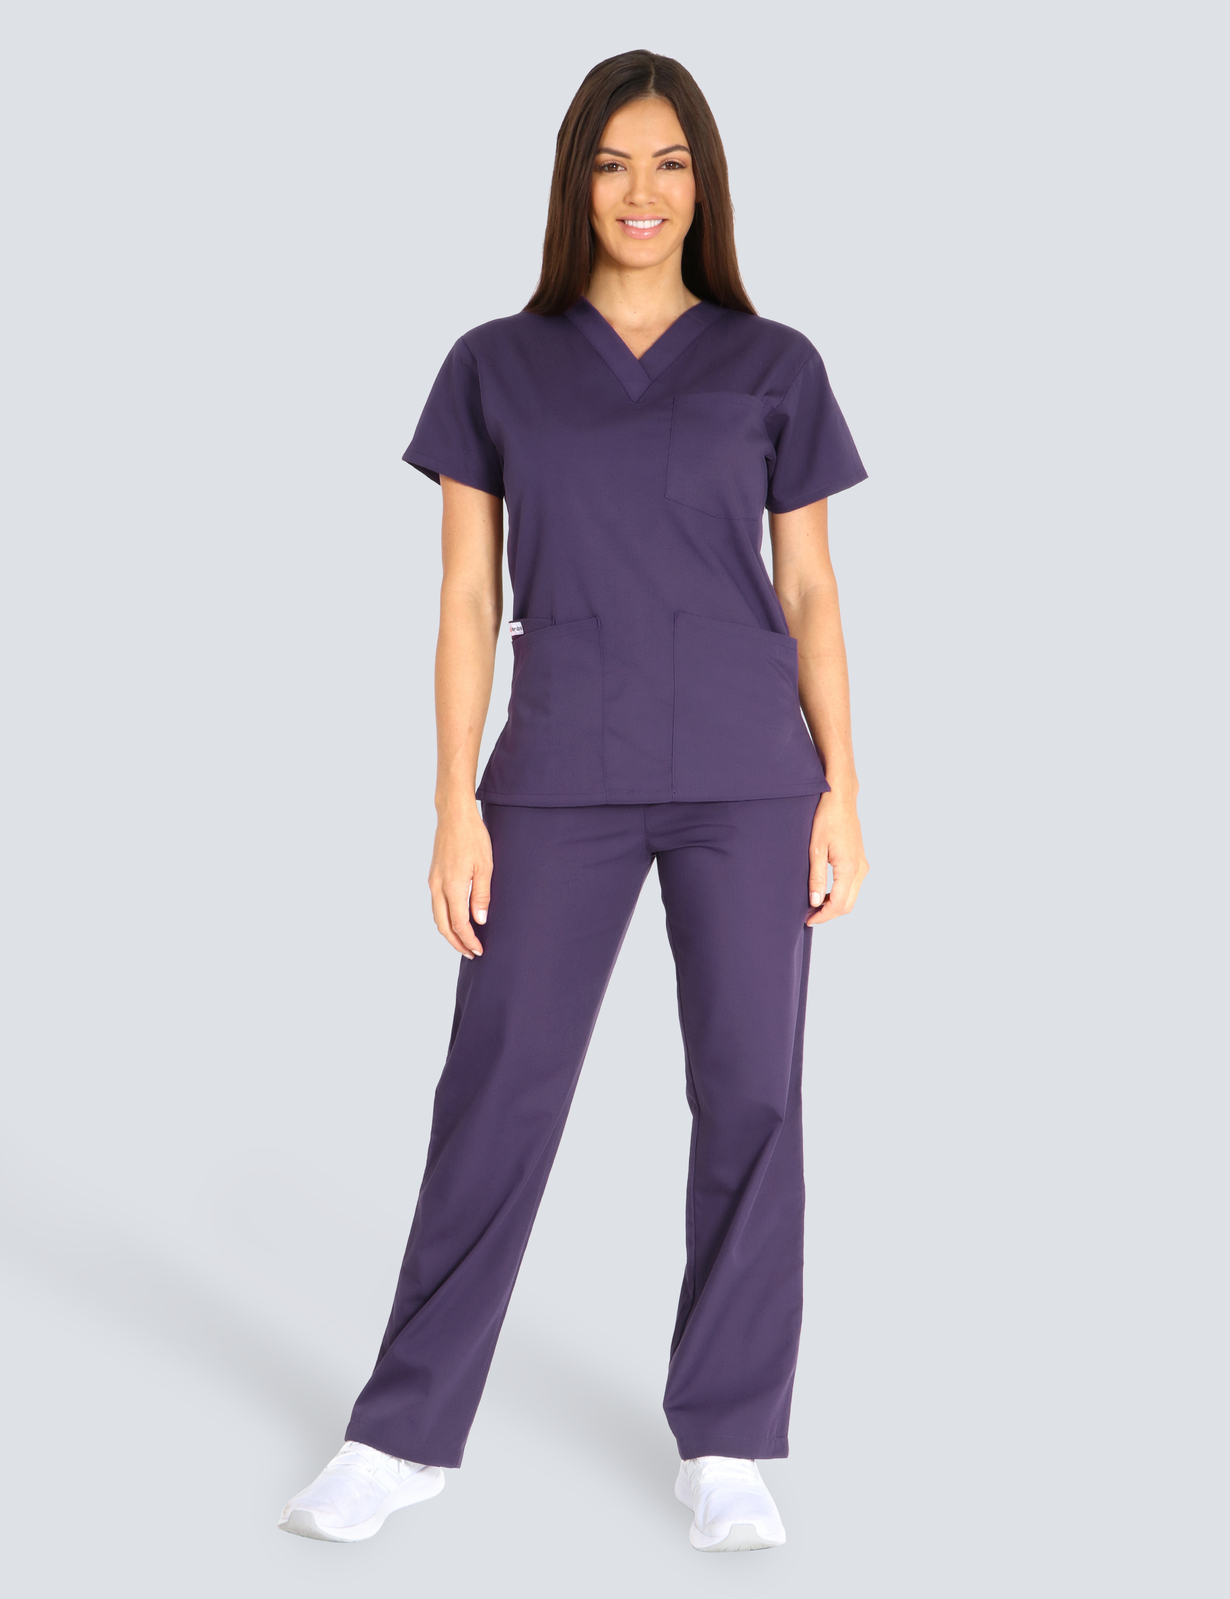 Peninsula Health - Dialysis RN (4 Pocket Scrub Top and Cargo Pants in Aubergine incl Logos)